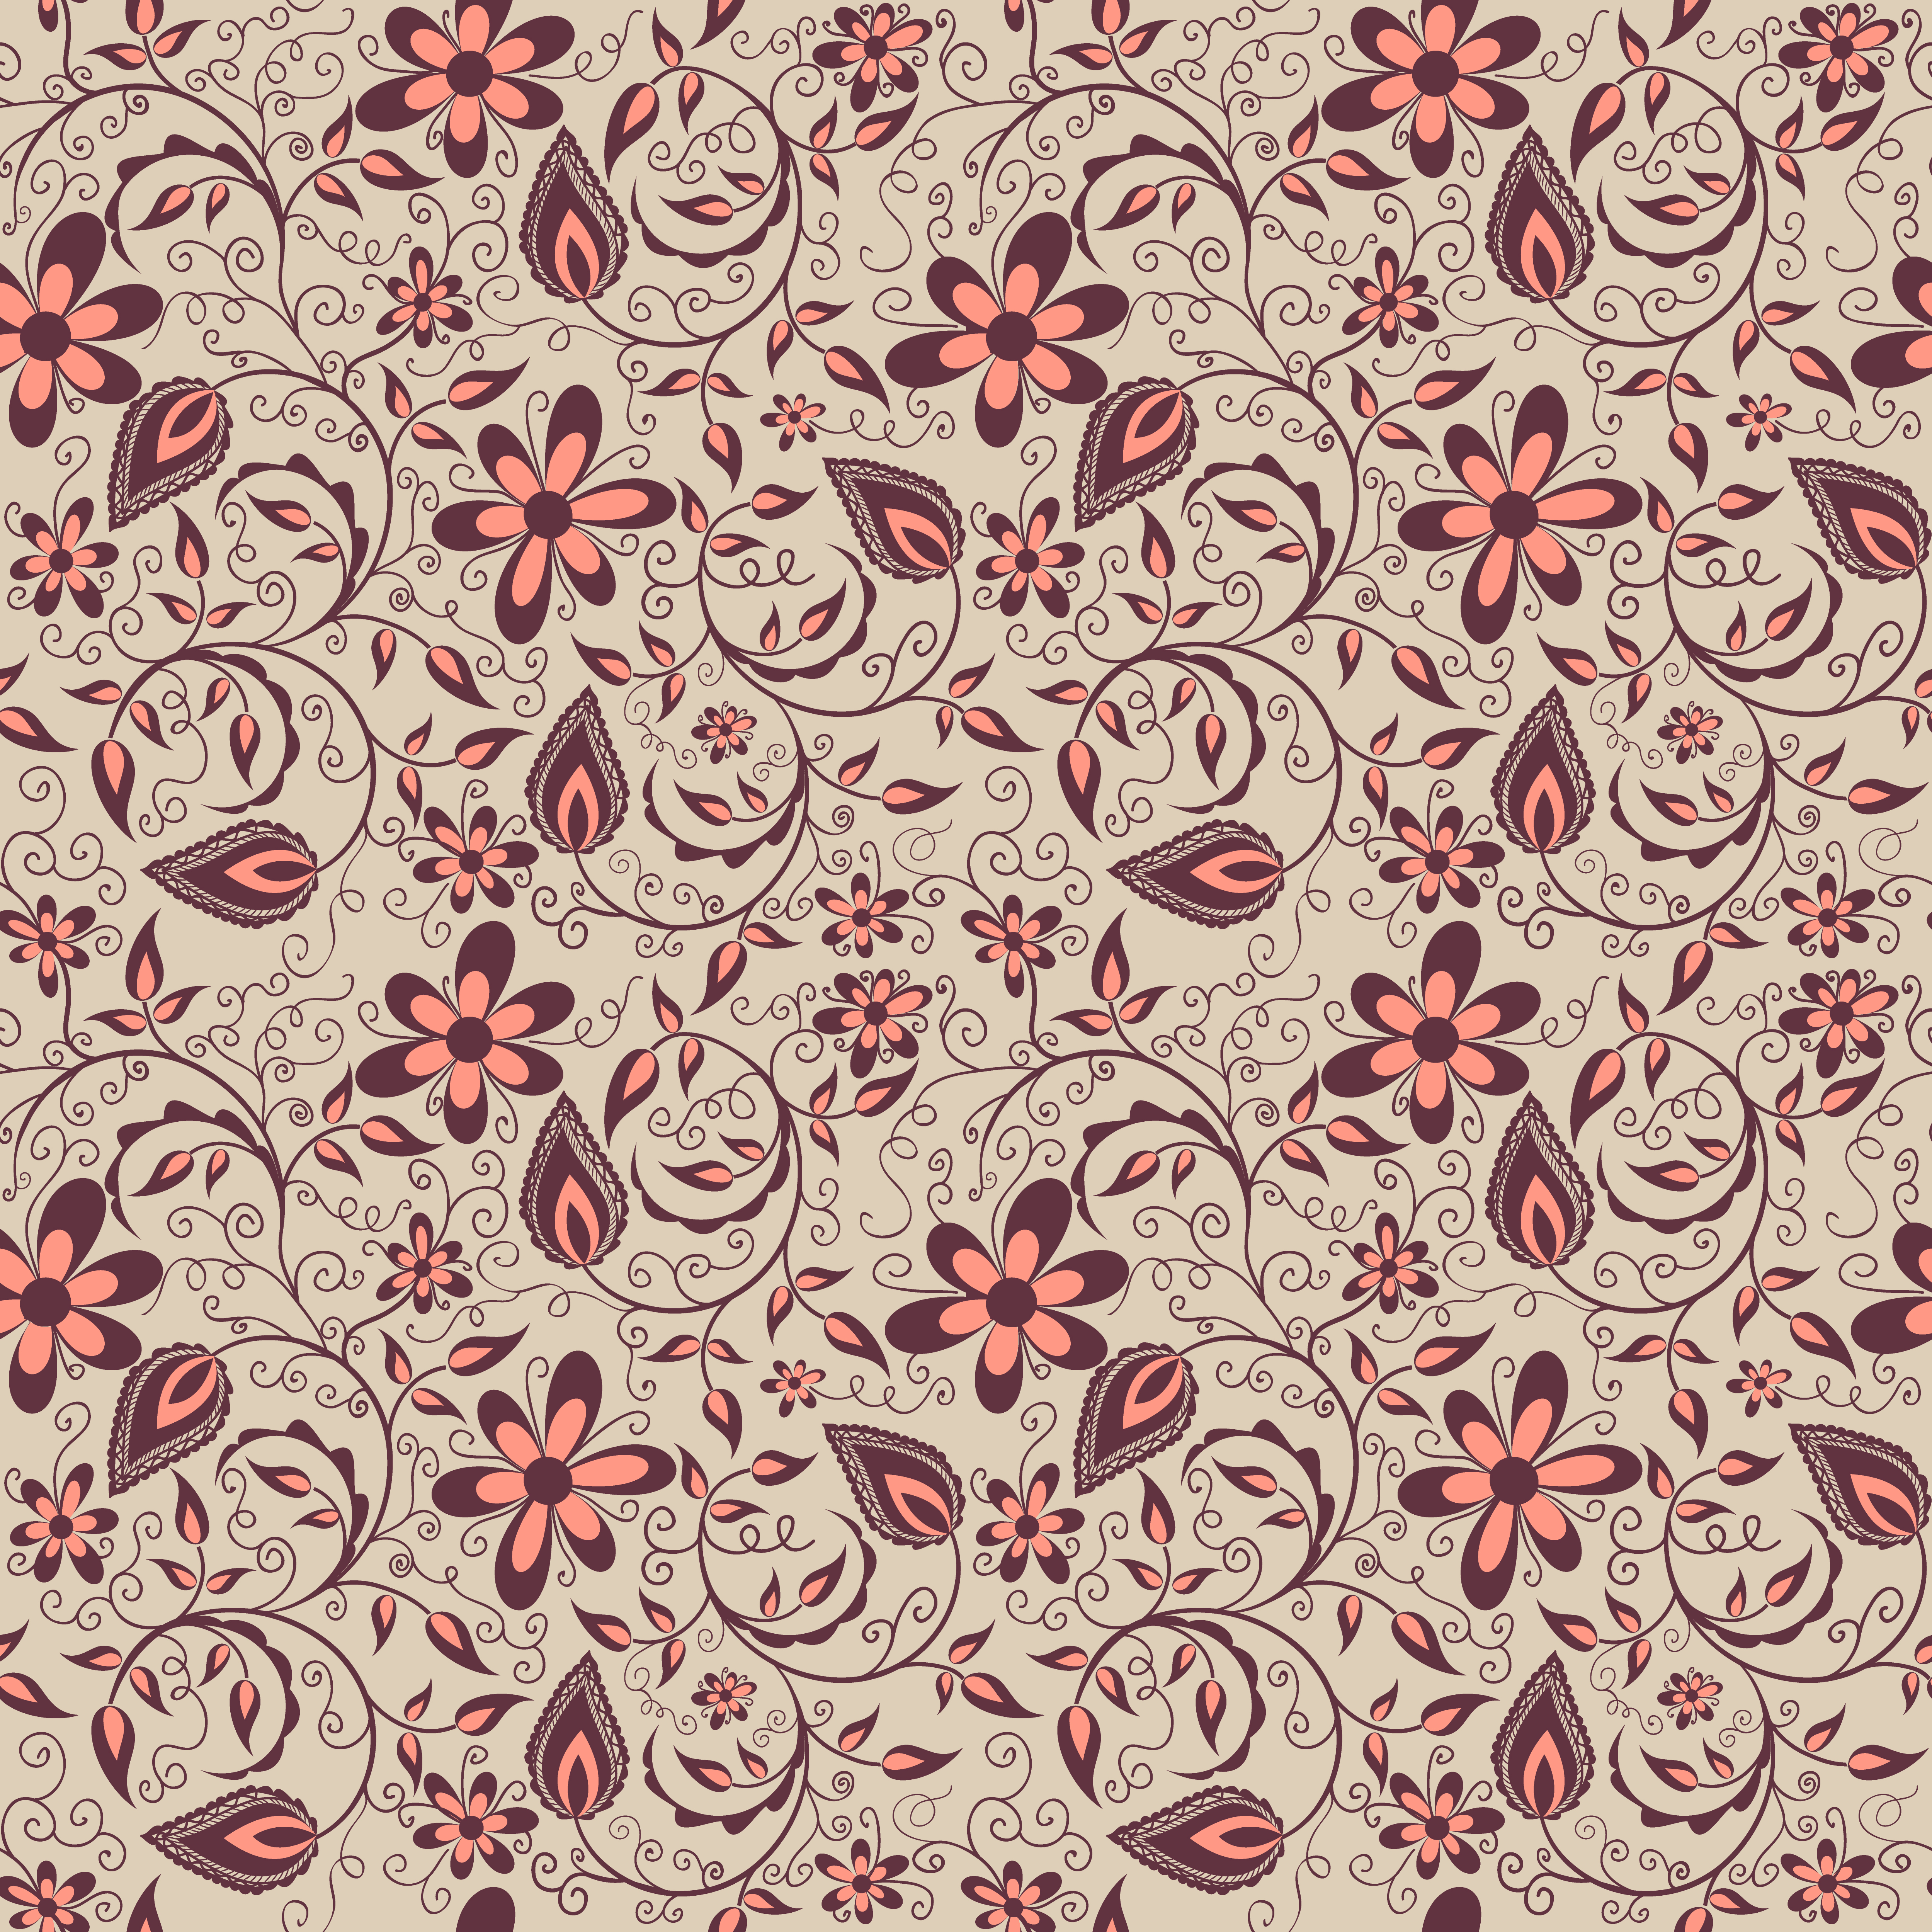 Wallpapers pattern flowers texture on the desktop